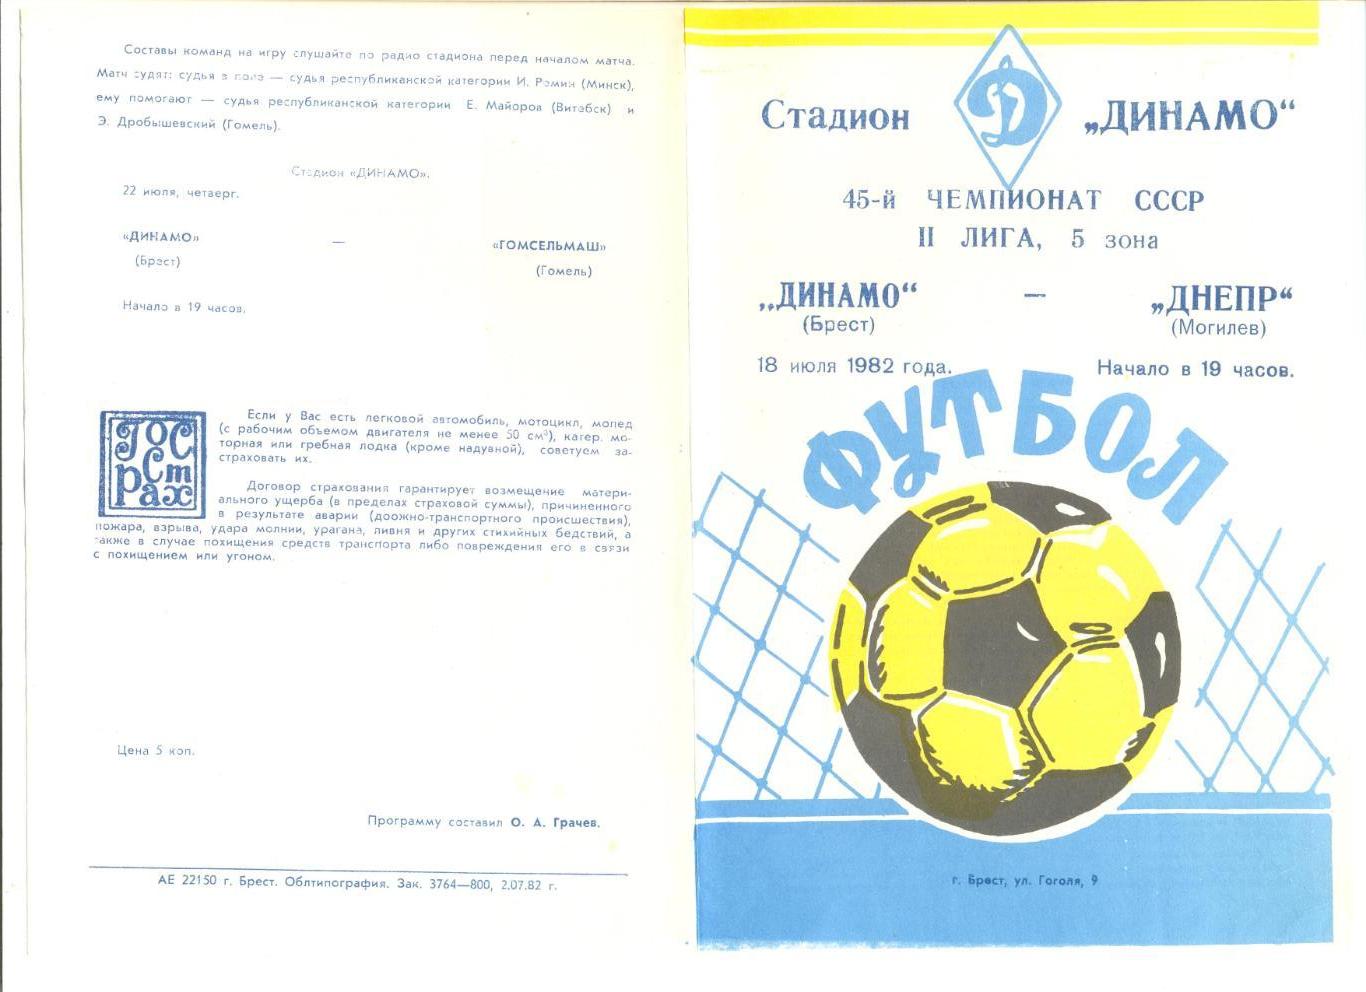 Динамо Брест - Днепр Могилев 18.07.1982 г.